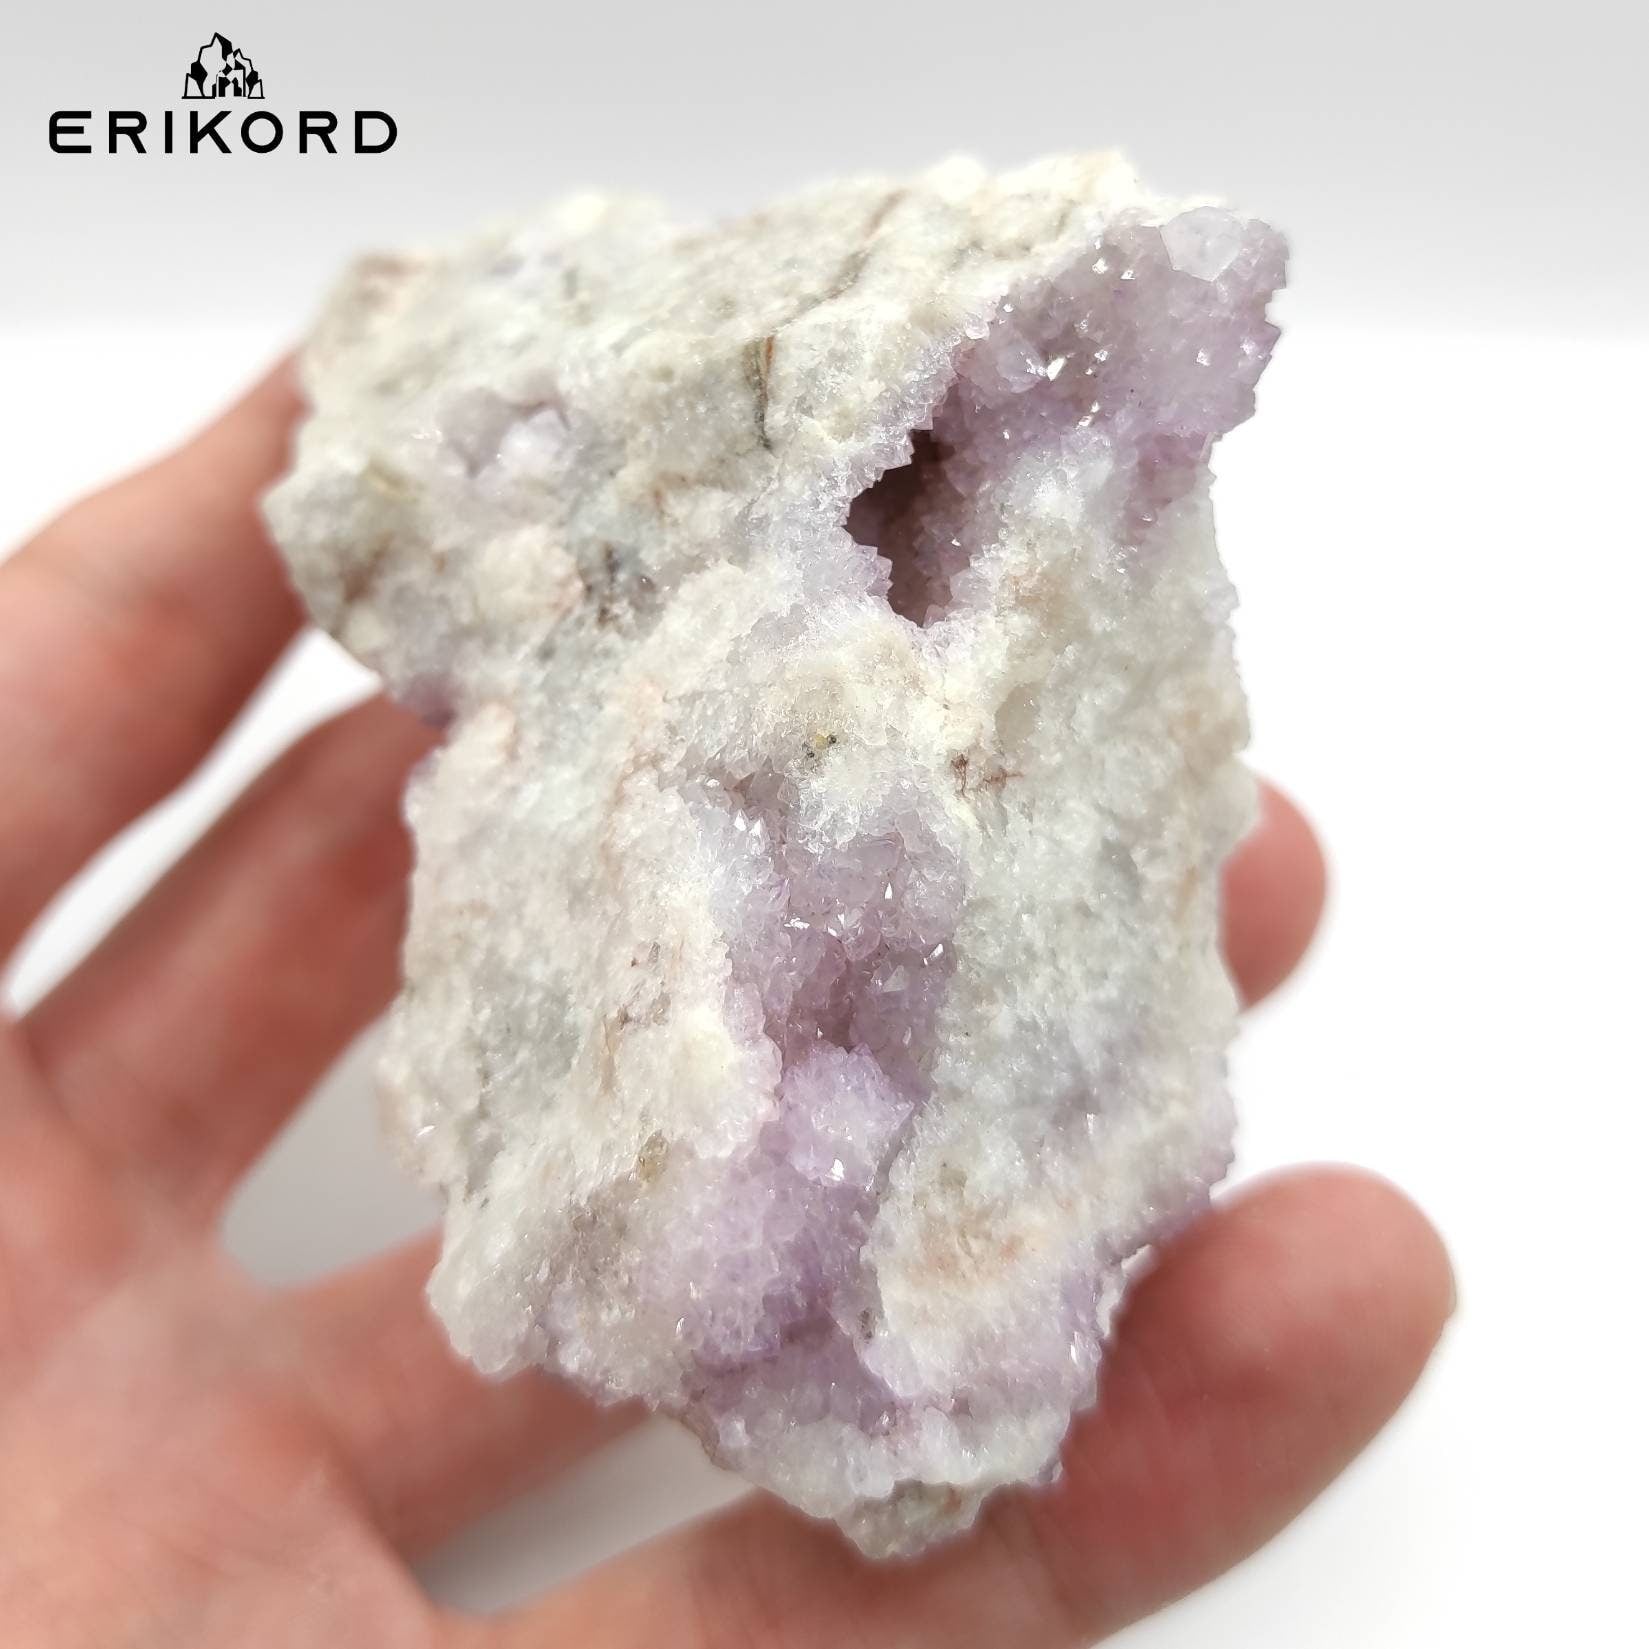 215g Thunder Bay Amethyst Crystal - Natural Amethyst Mineral Specimen - Ontario Canada - Spirit Quartz Style Amethyst - Raw Ethical Crystals